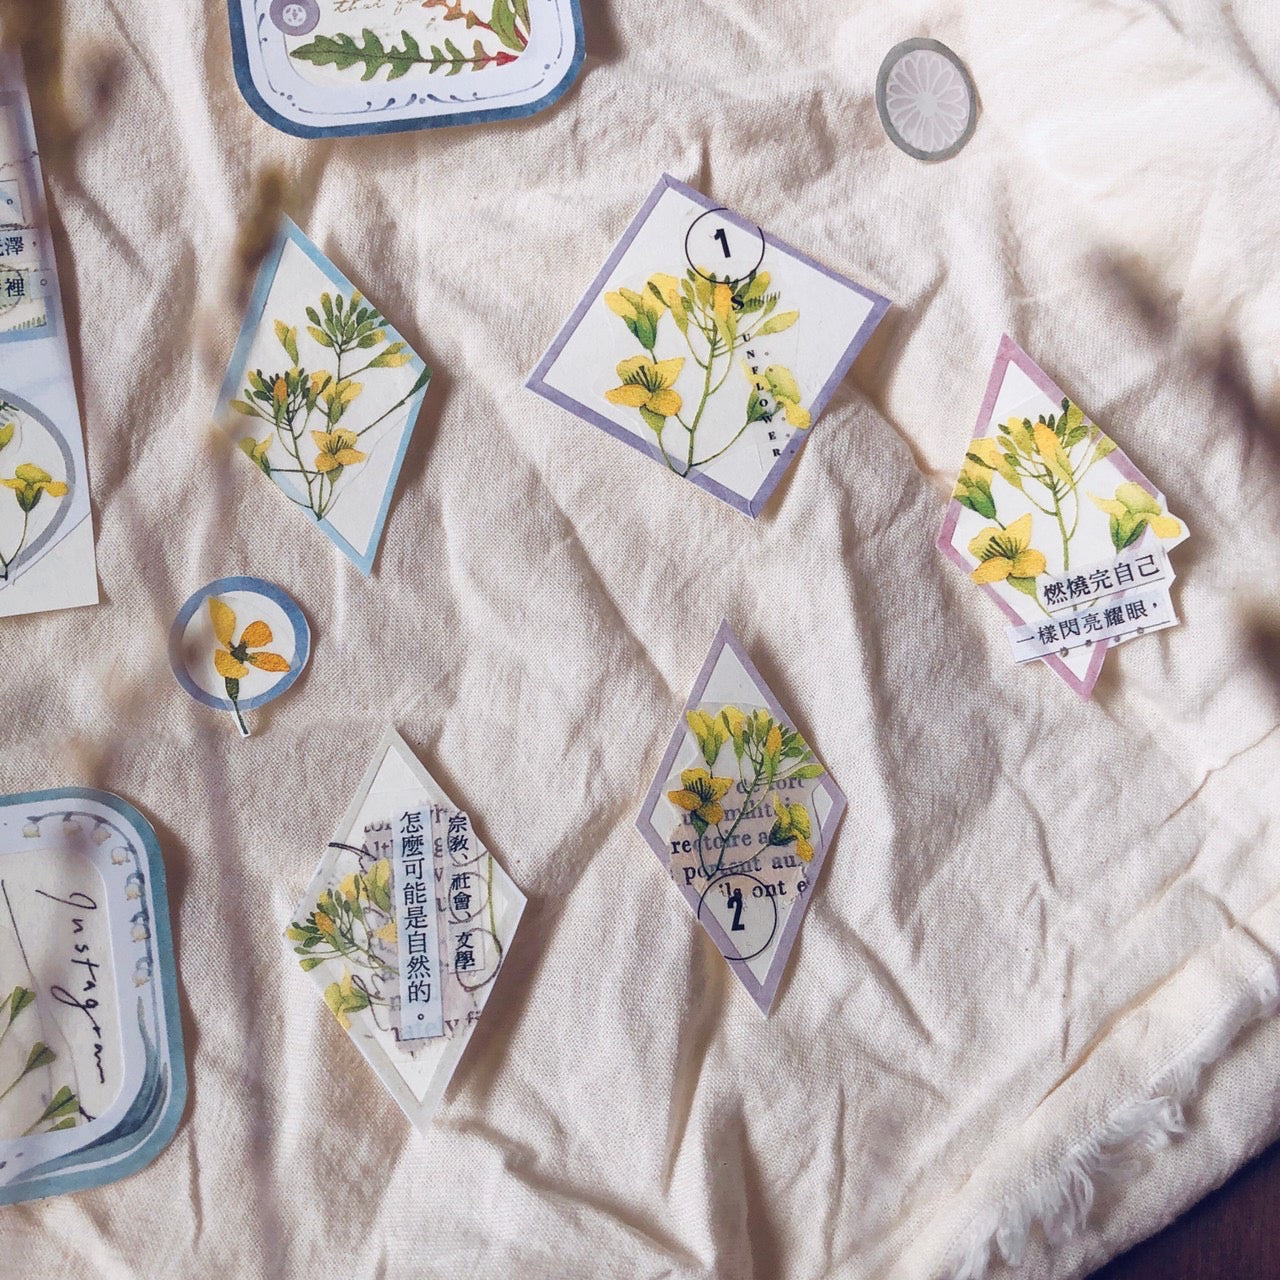 Loidesign Lovely Flower Frame Die-cut Washi Tape